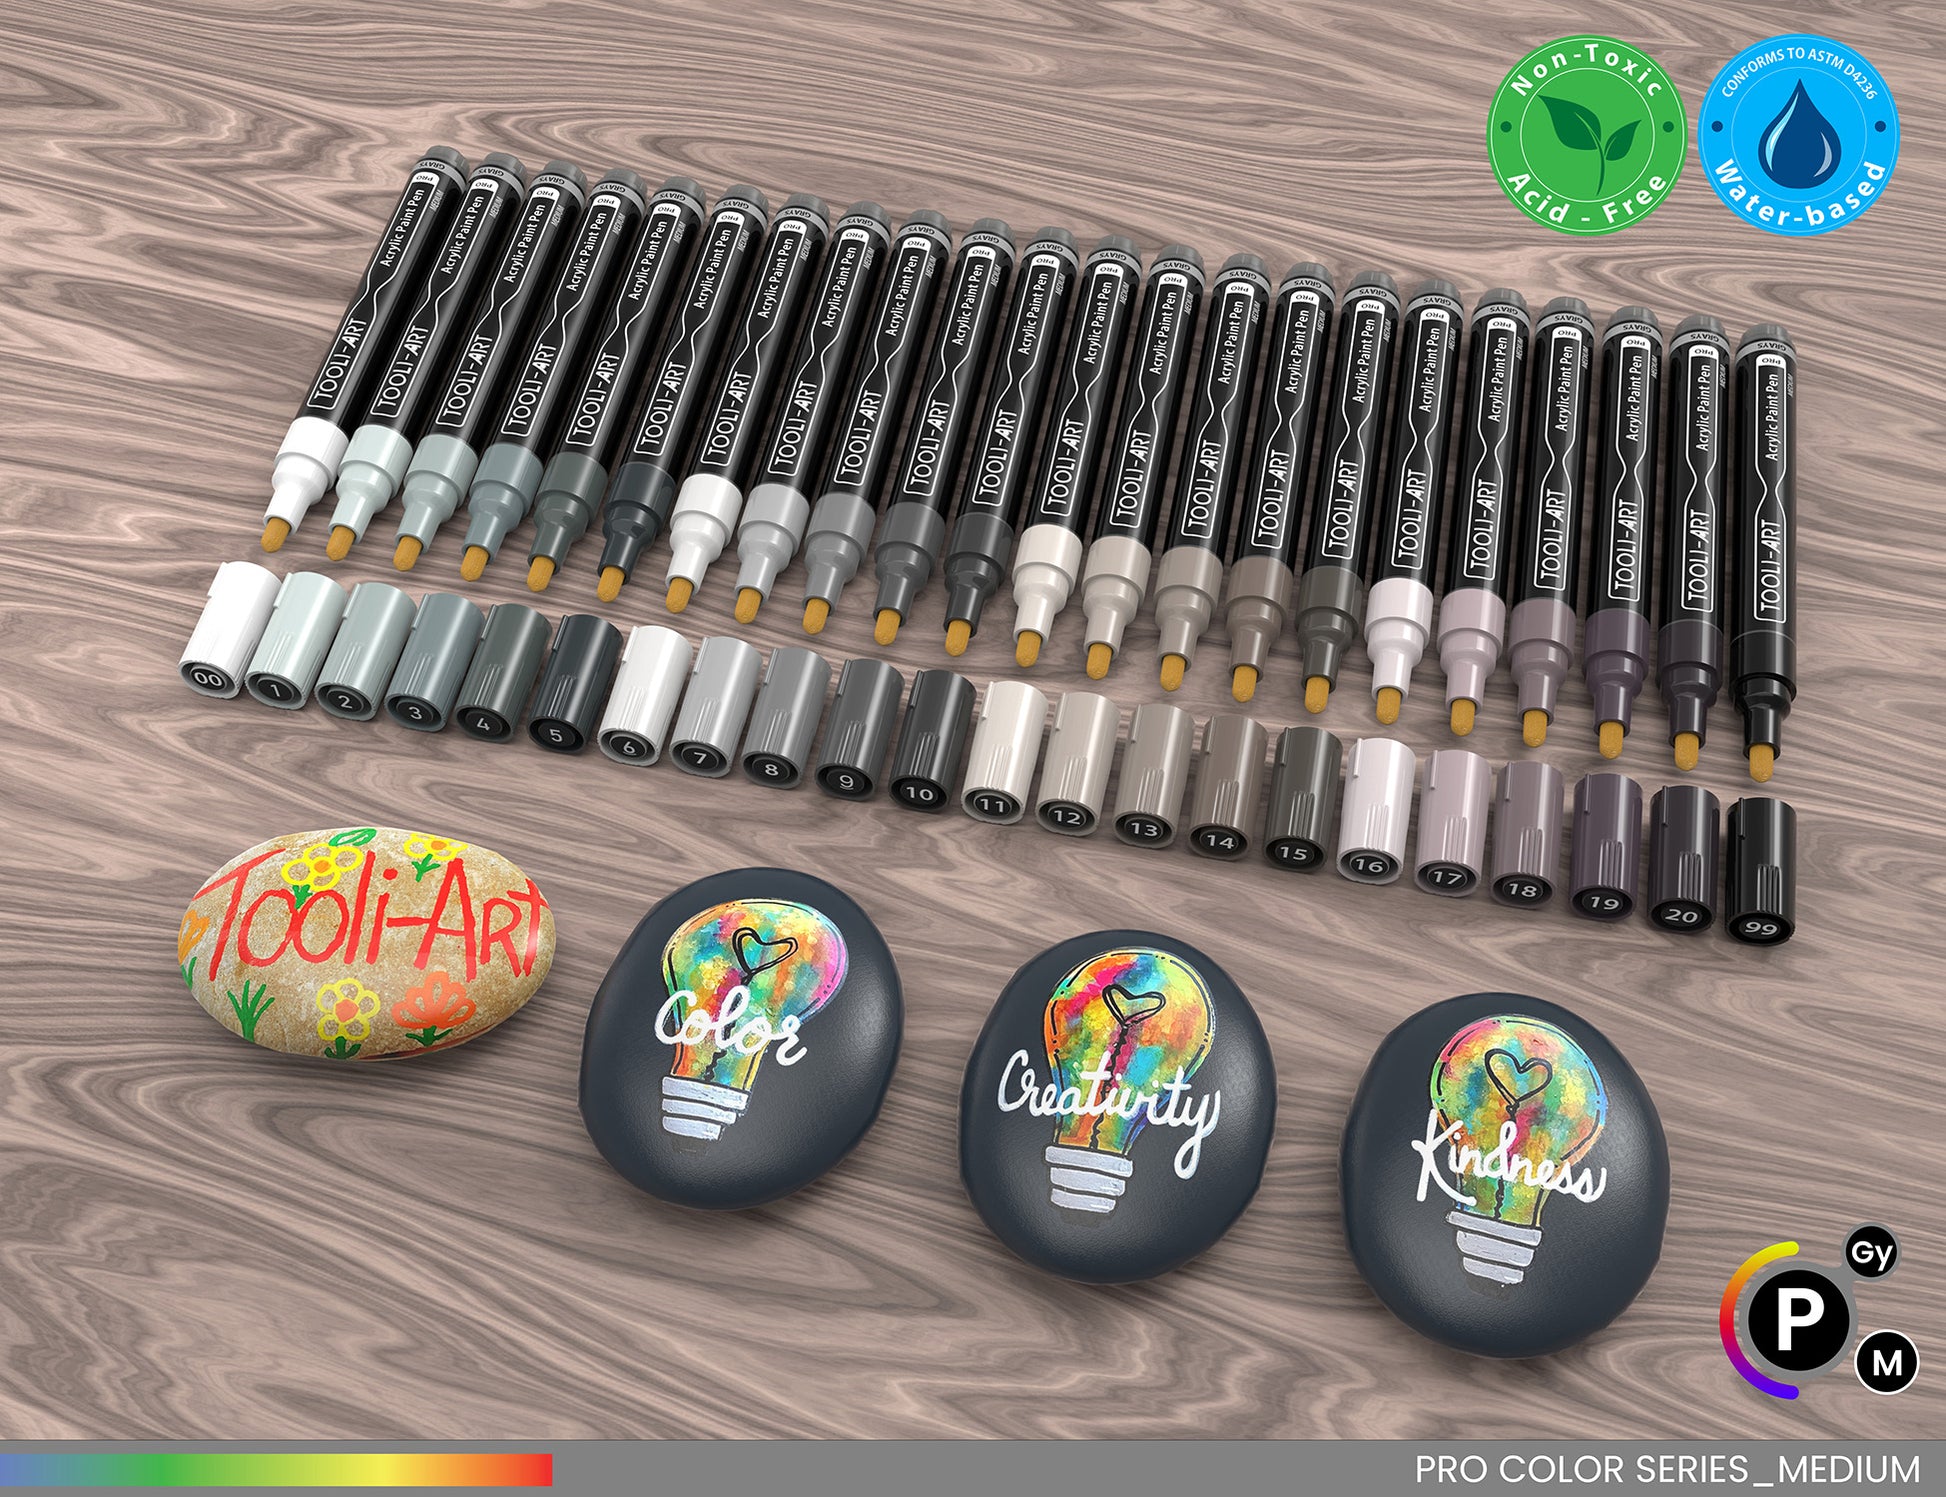  LoveinDIY Acrylic Paint Markers - Permanent Paint Pens